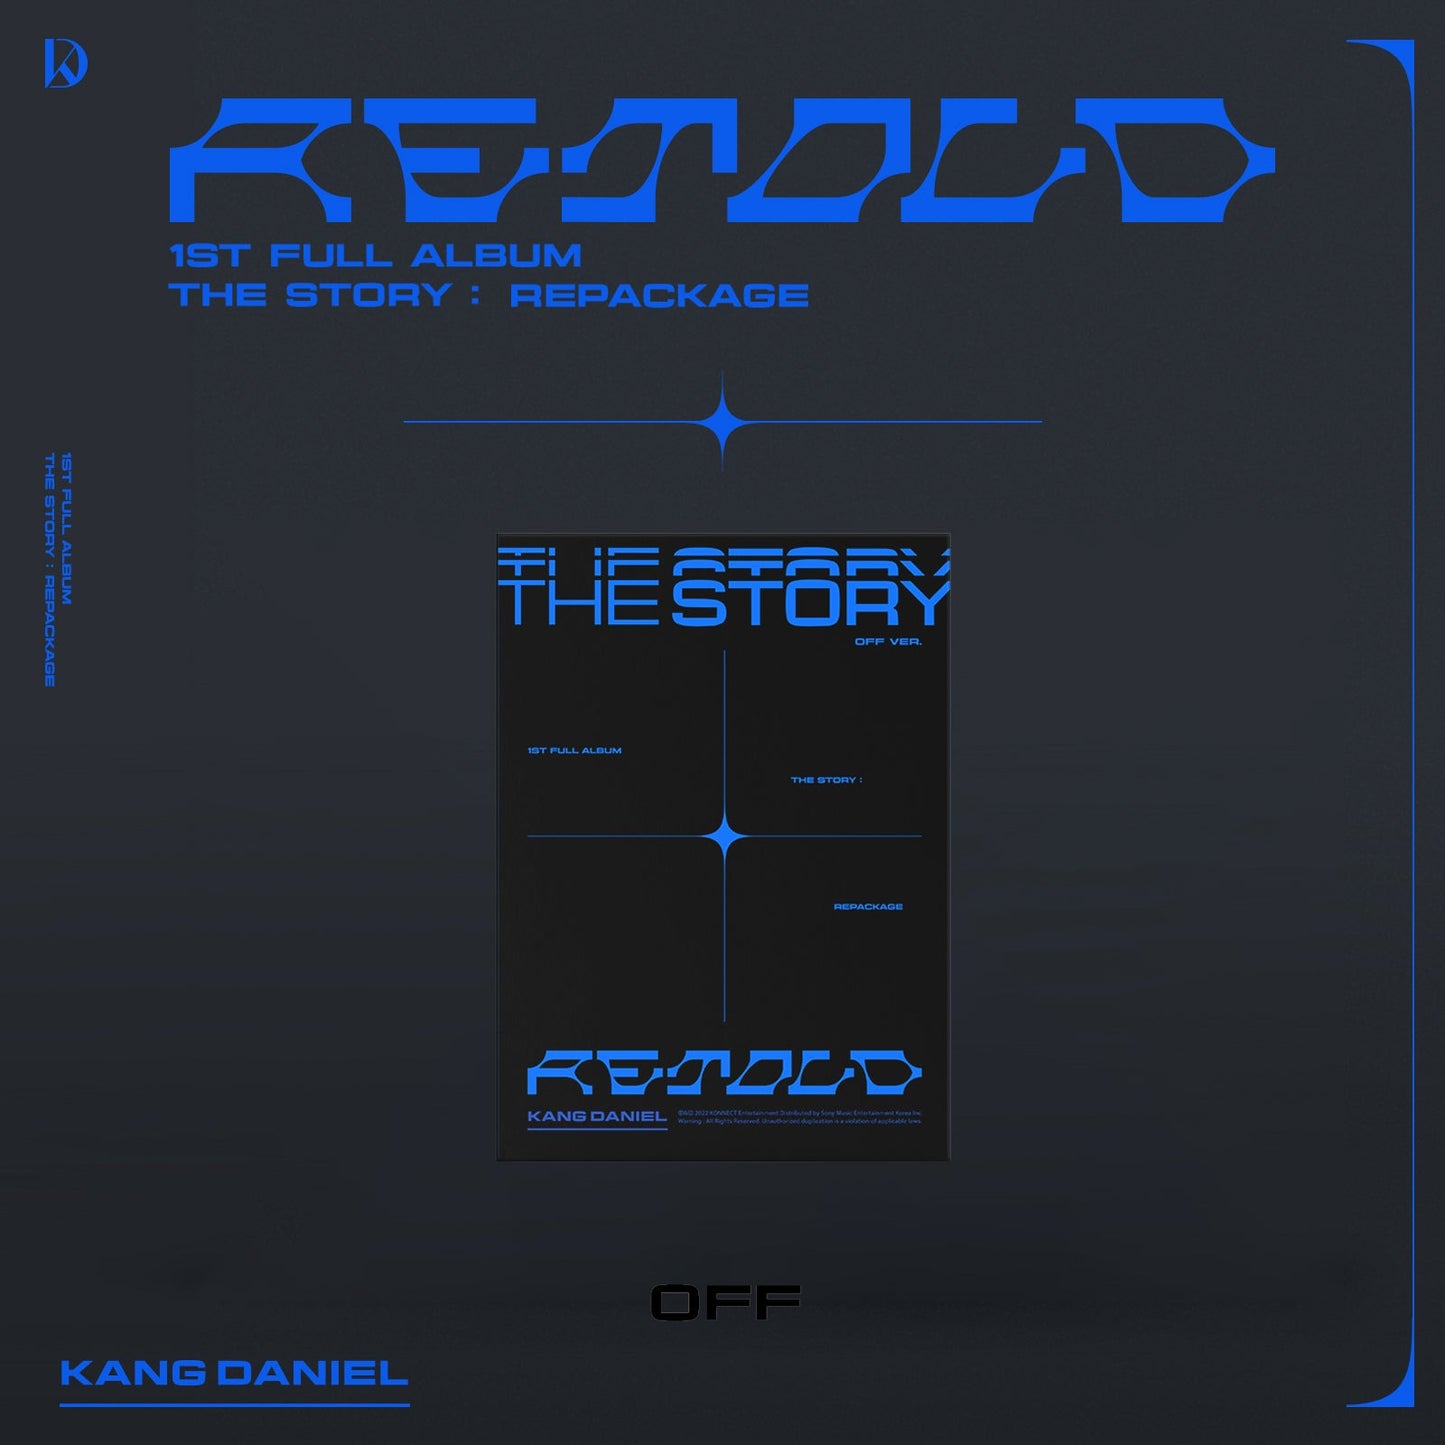 KANG DANIEL 1ST FULL ALBUM REPACKAGE 'RETOLD' OFF VERSION COVER